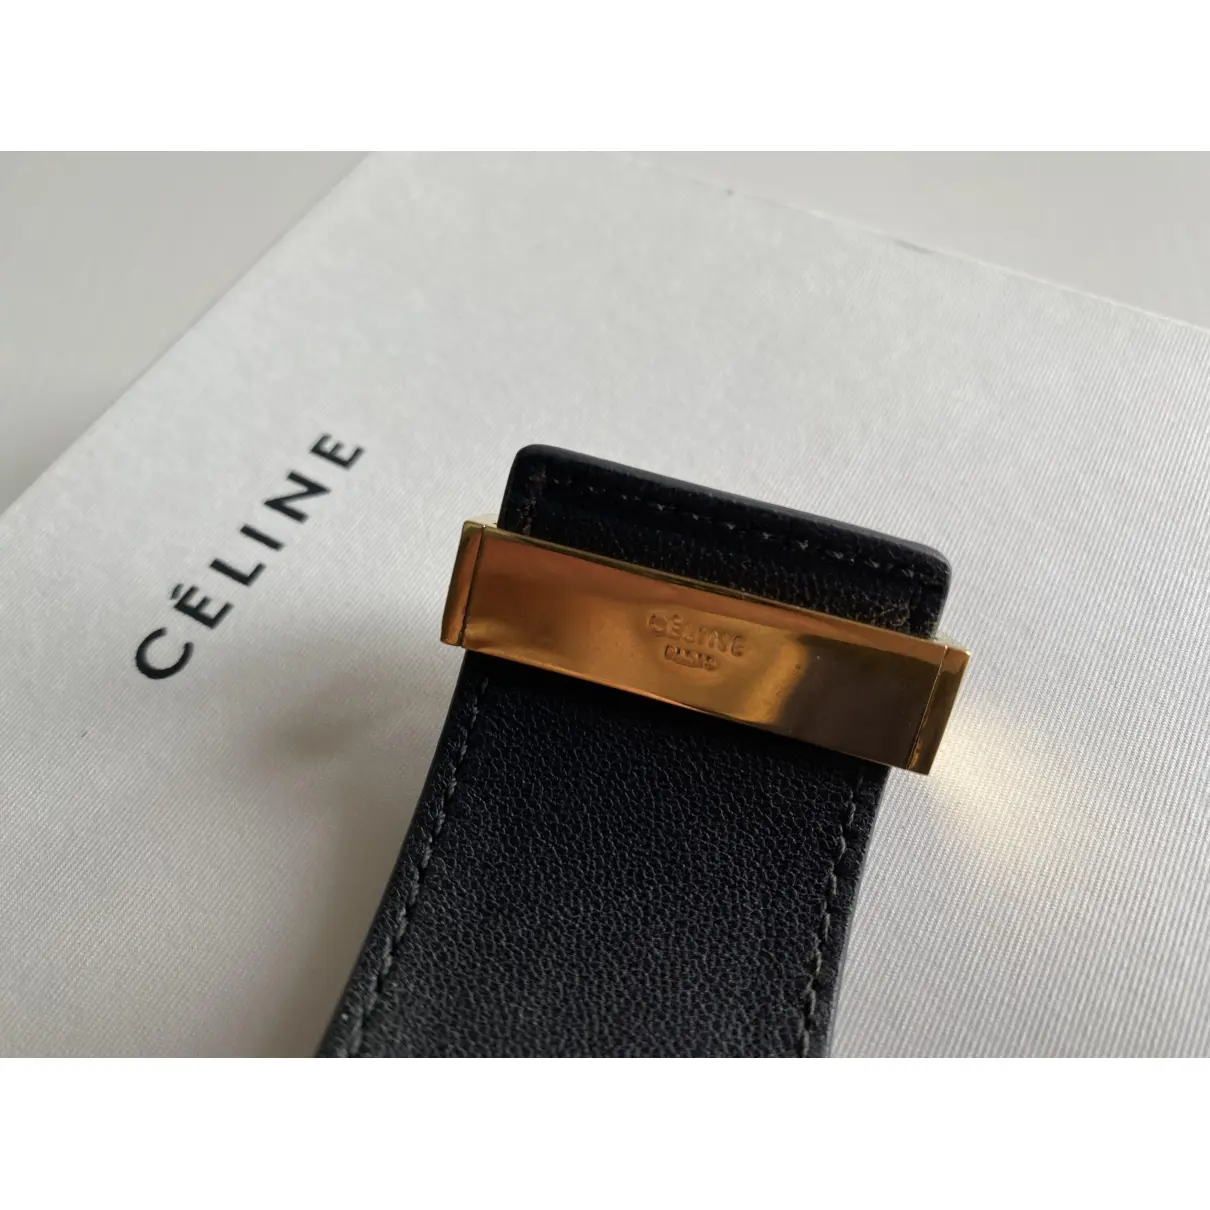 Buy Celine Leather bracelet online